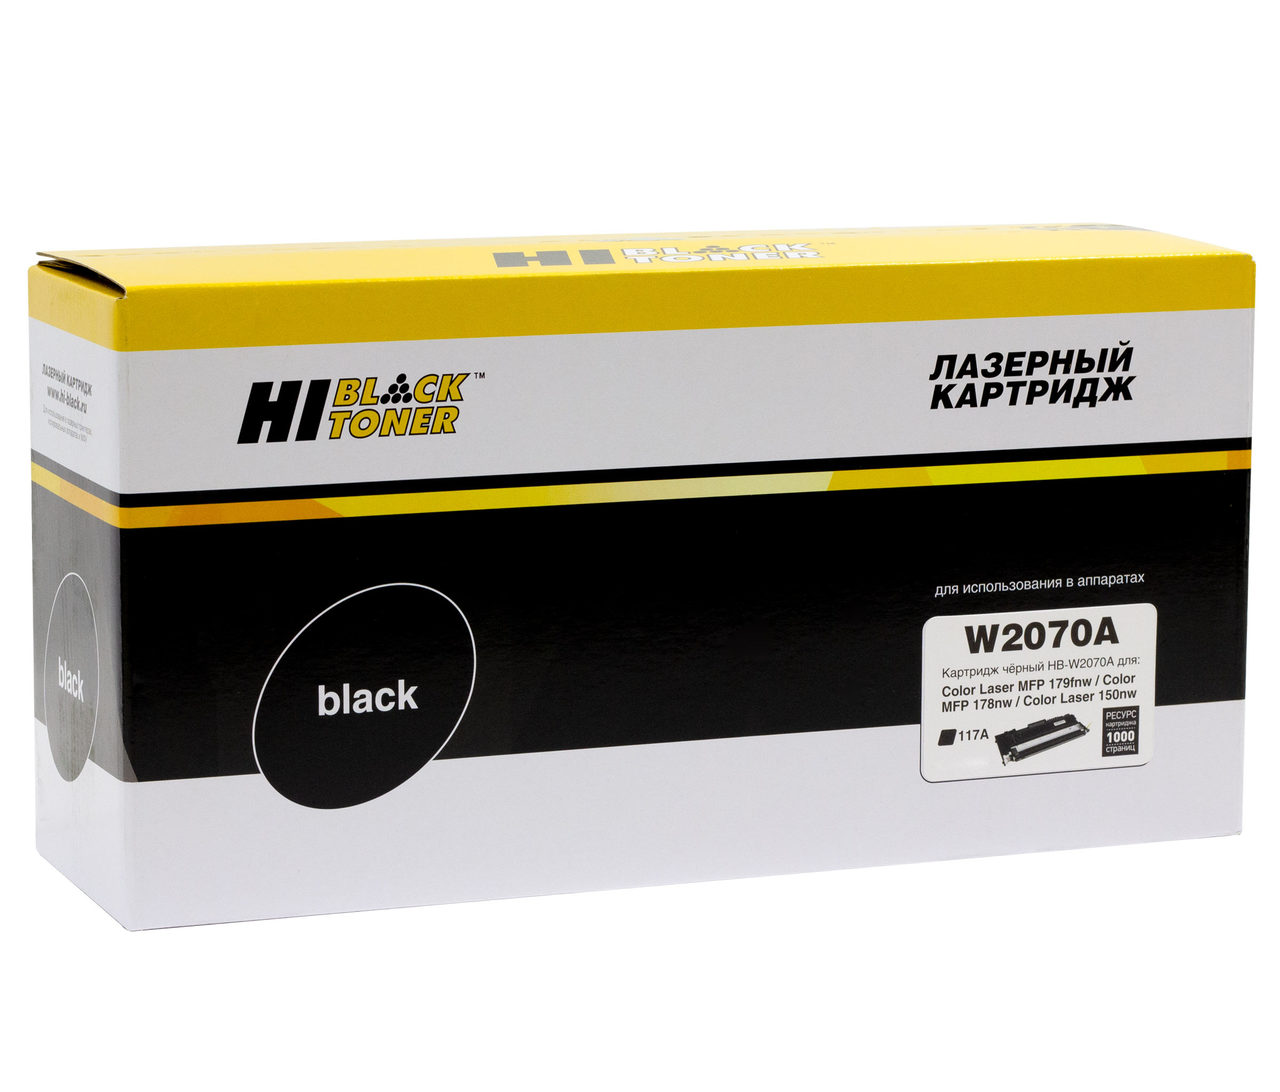 Тонер-картридж Hi-Black (HB-W2070A) для HP CL150a/150nw/MFP178nw/179fnw, 117A, Bk, 1K